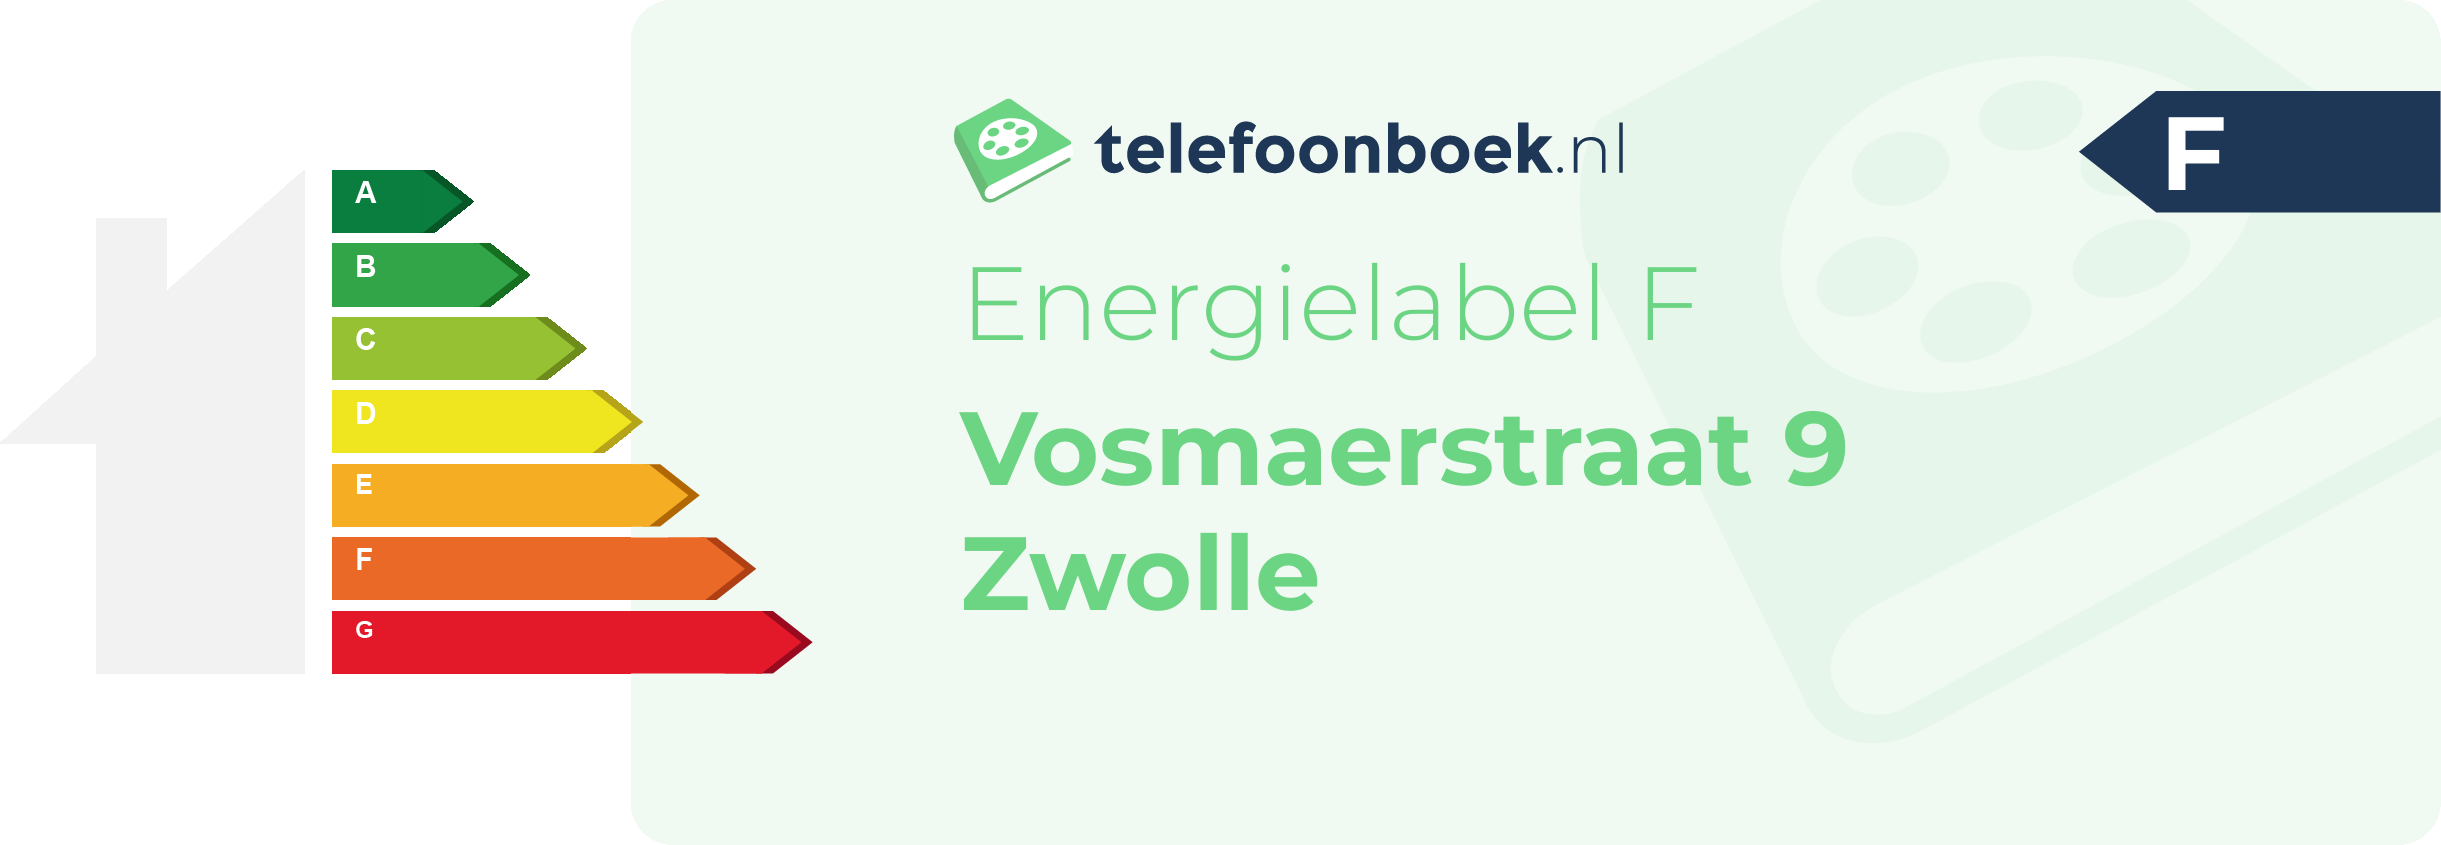 Energielabel Vosmaerstraat 9 Zwolle